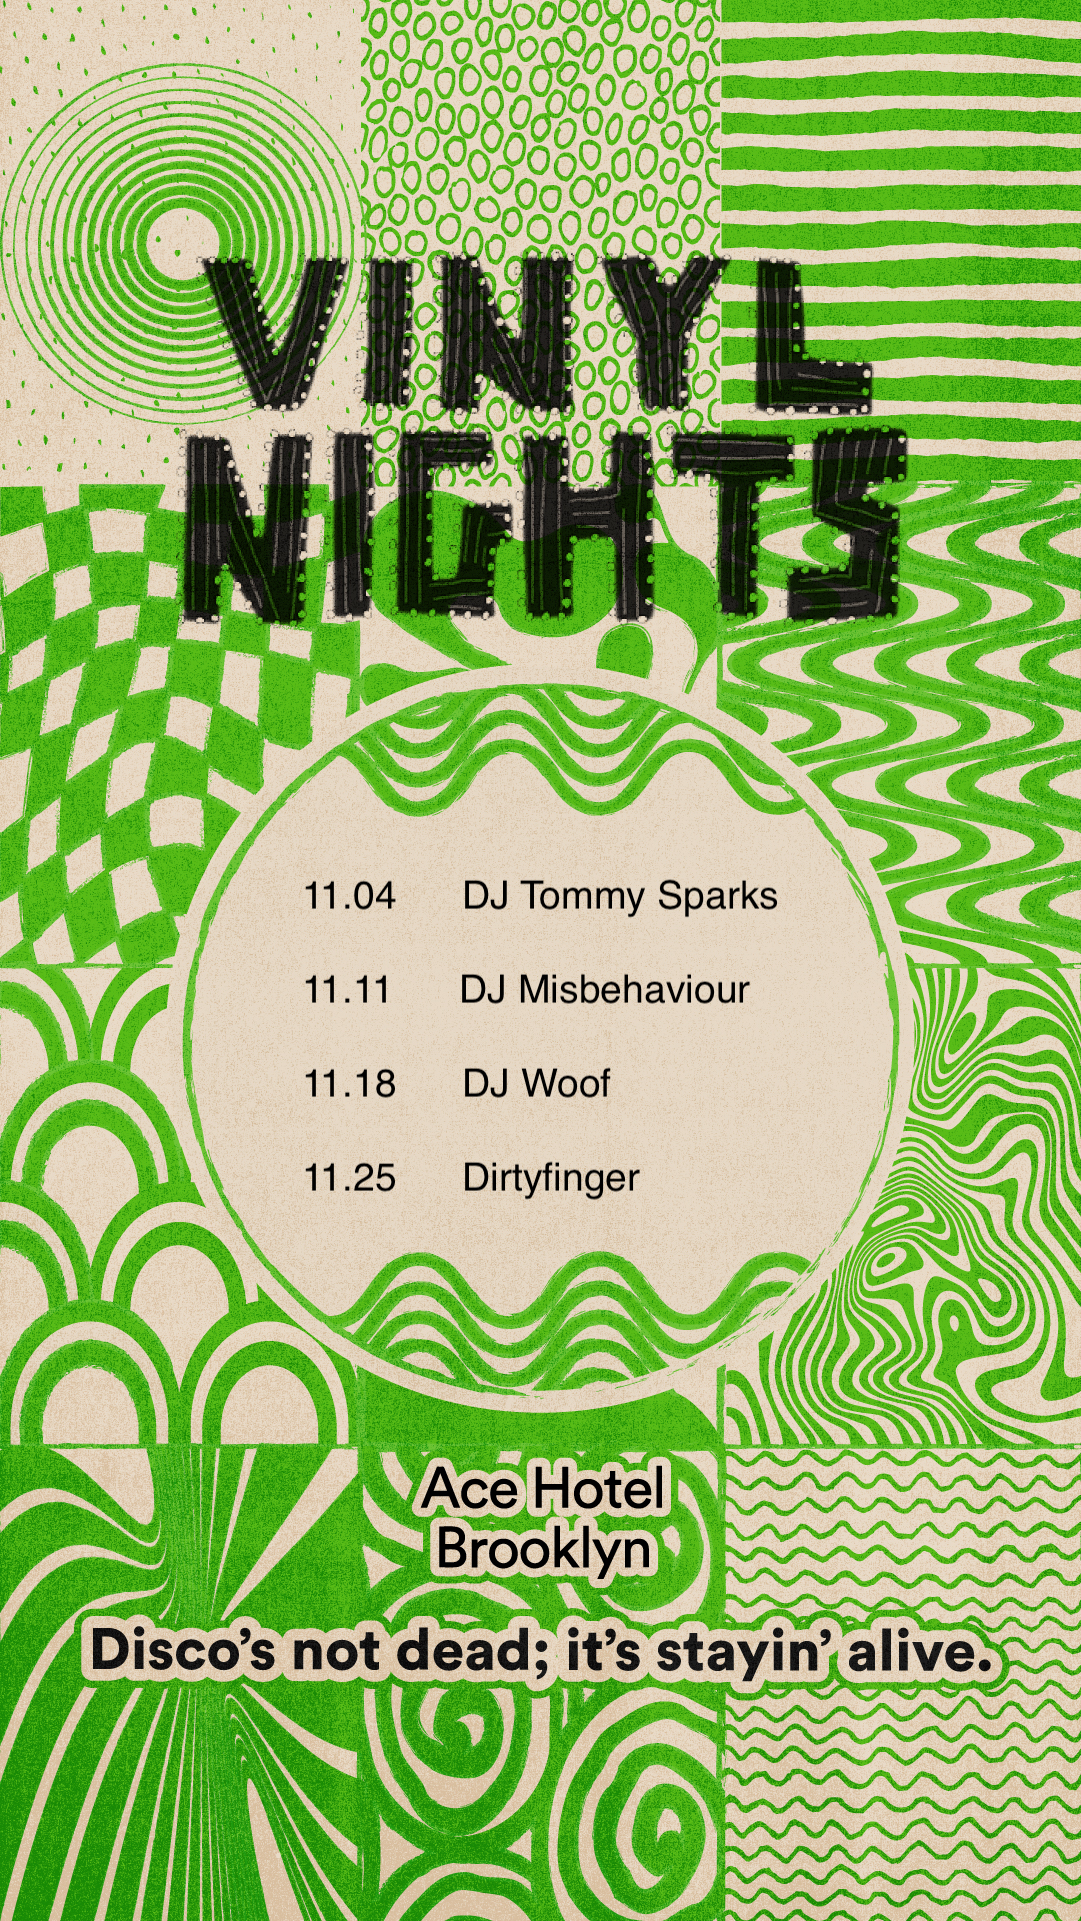 November flyer for Vinyl Nights